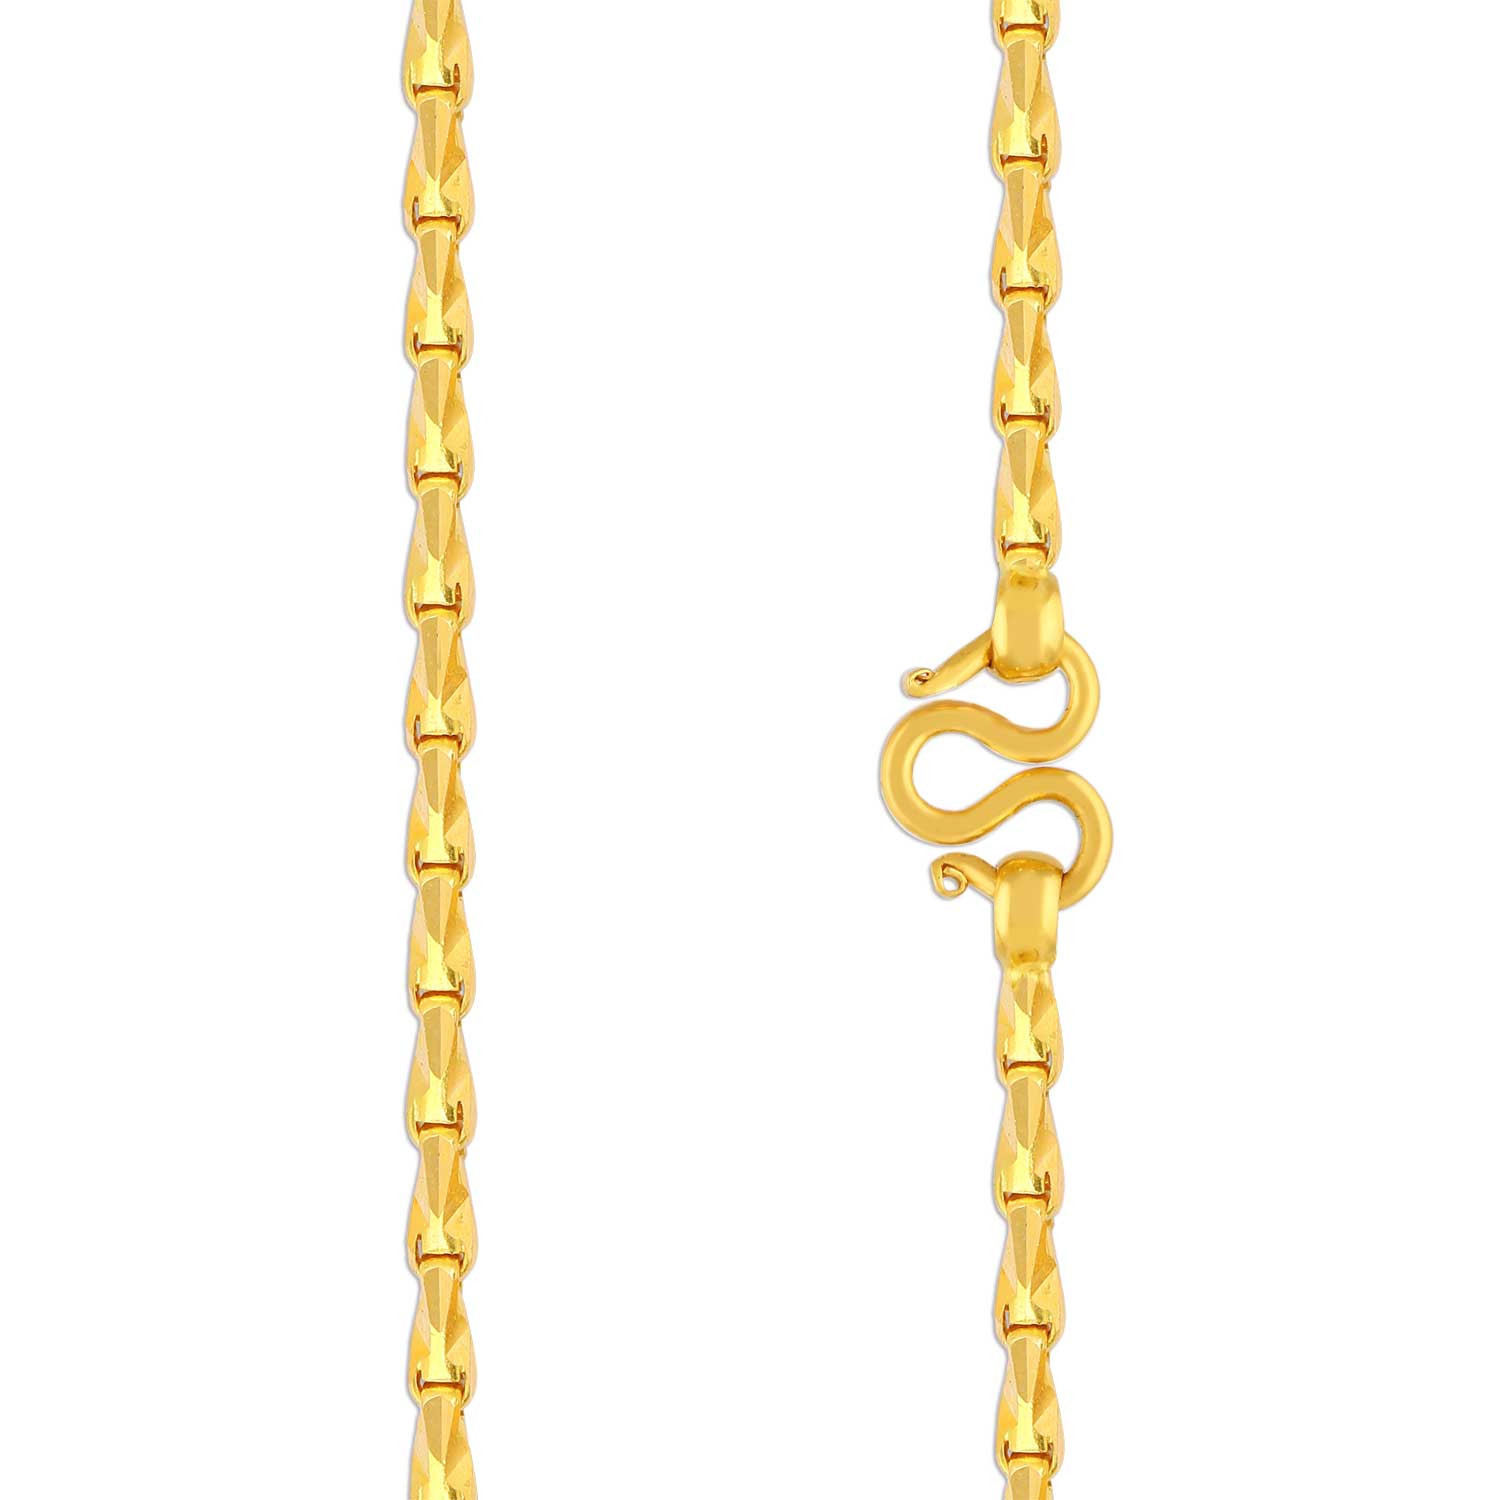 Malabar 22 KT Gold Studded Handcrafted Chain CHSRHMA057